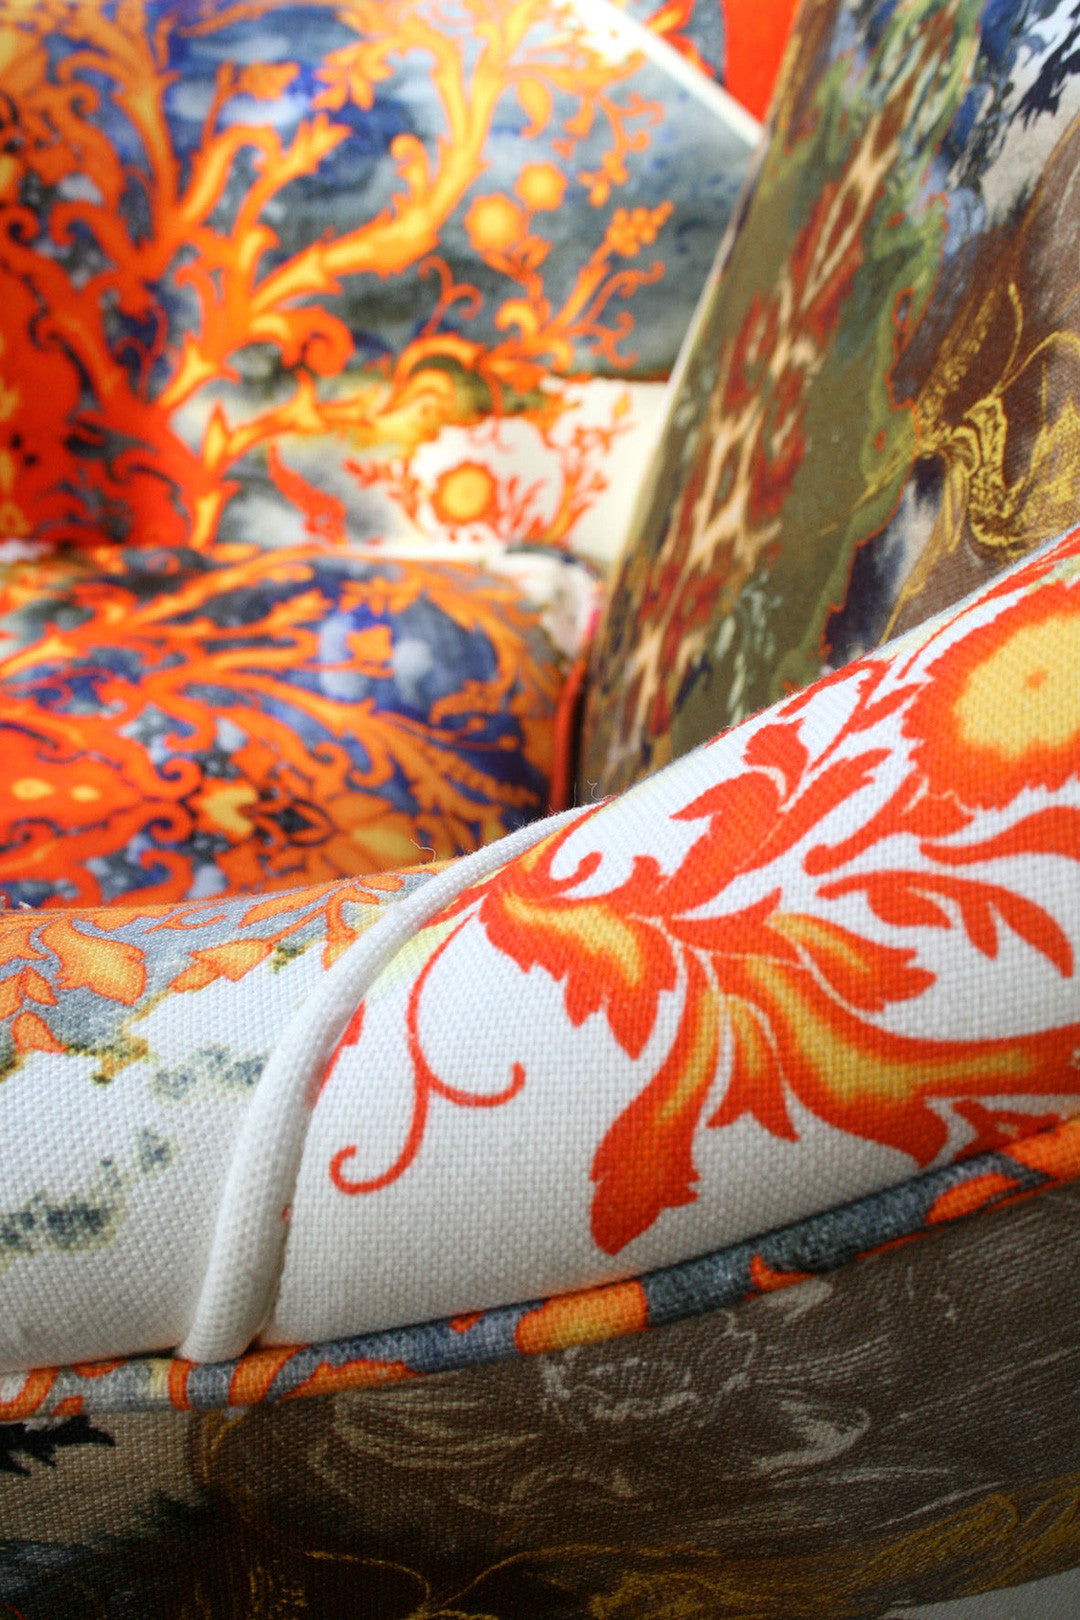 Grand Blotch Damask Room Fabric 2 - Multicolor